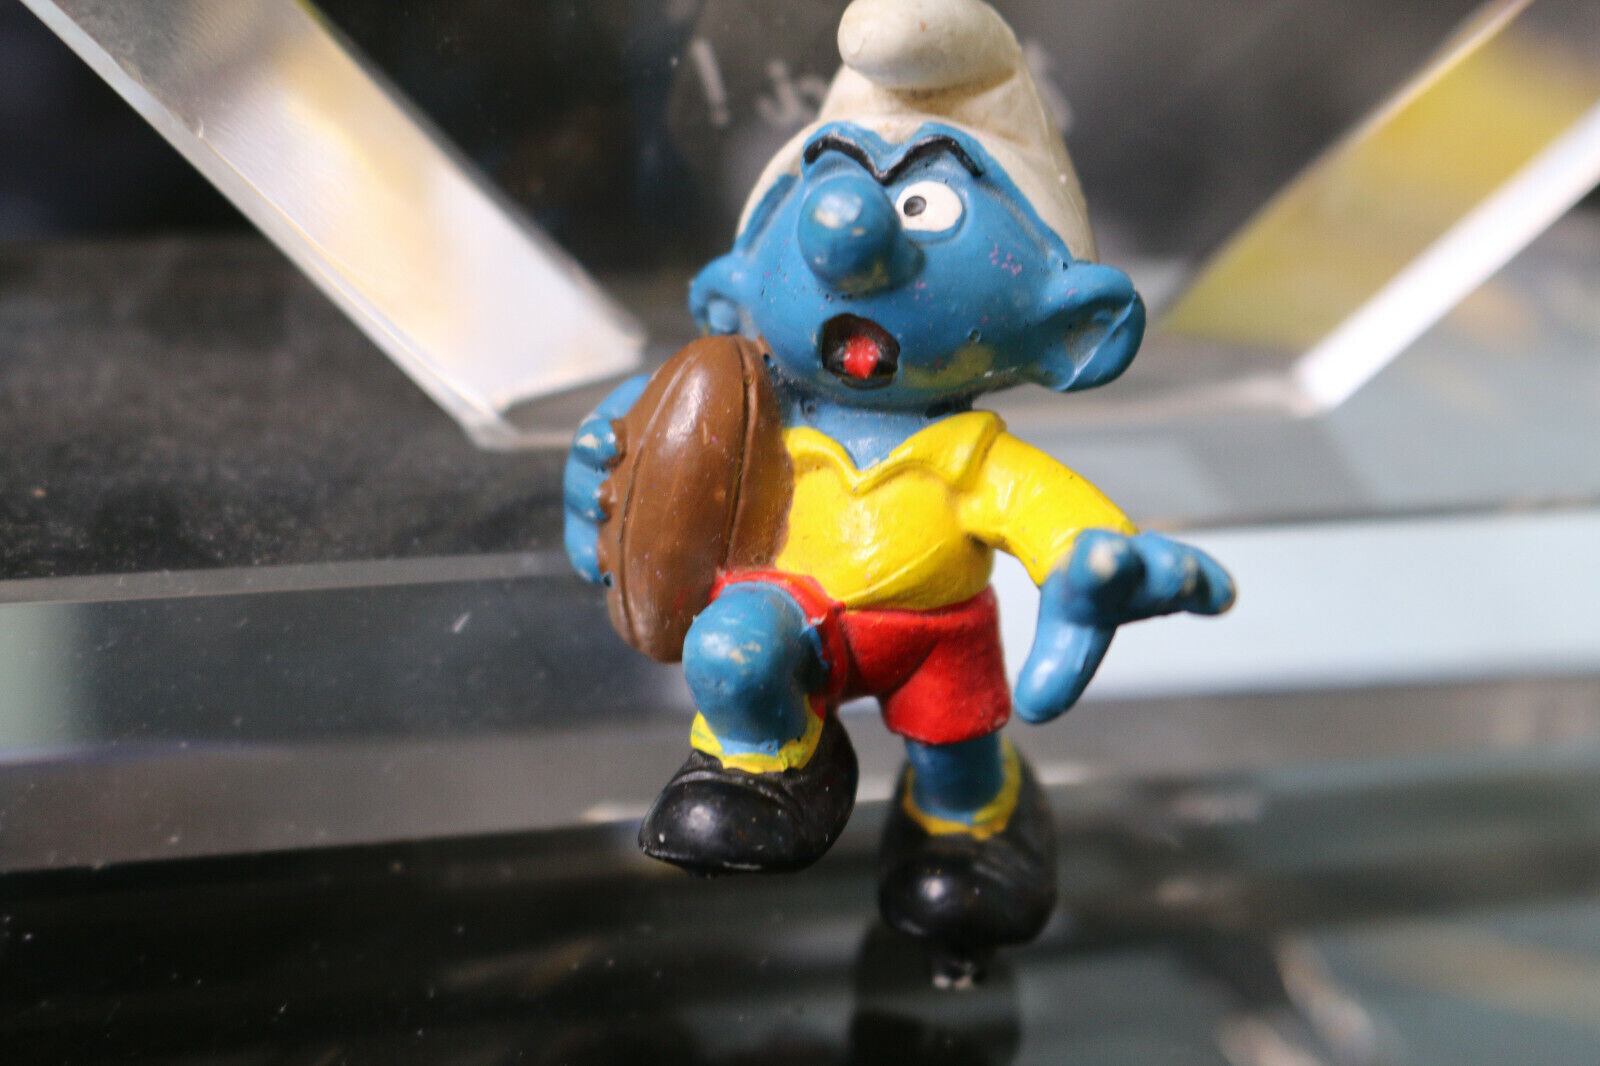 Buy the Vntg Smurfs Playset W/ Smurf Figures